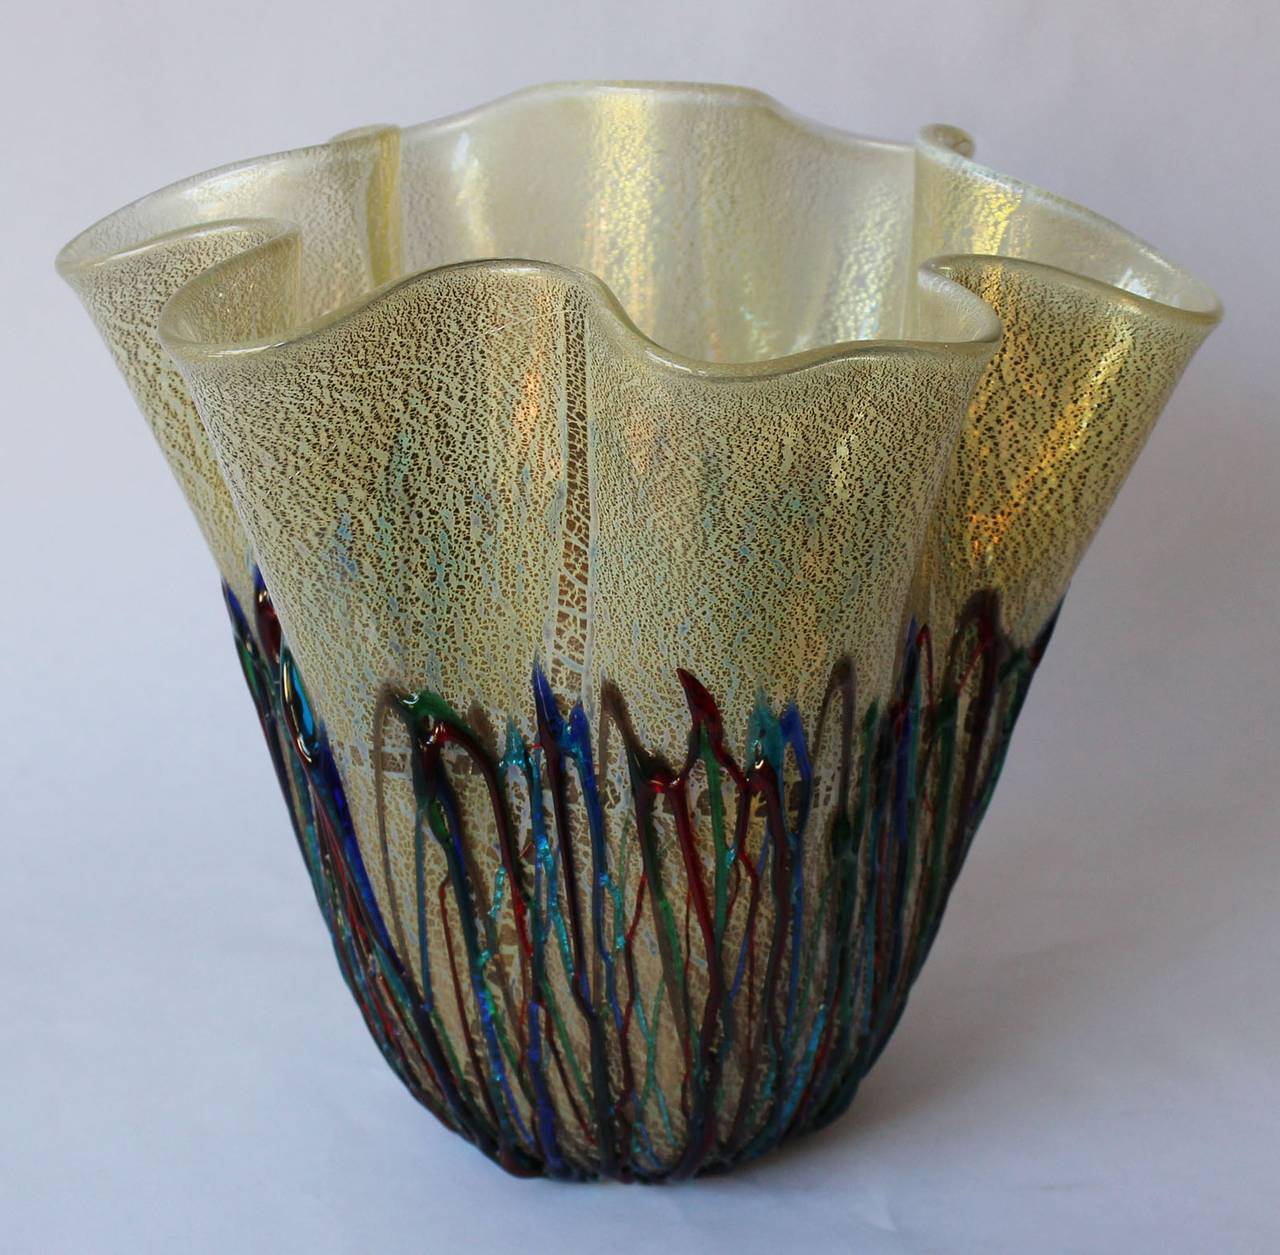 A Vistosi Murano Handkerchief vase with gold flecks and multi-color accents.